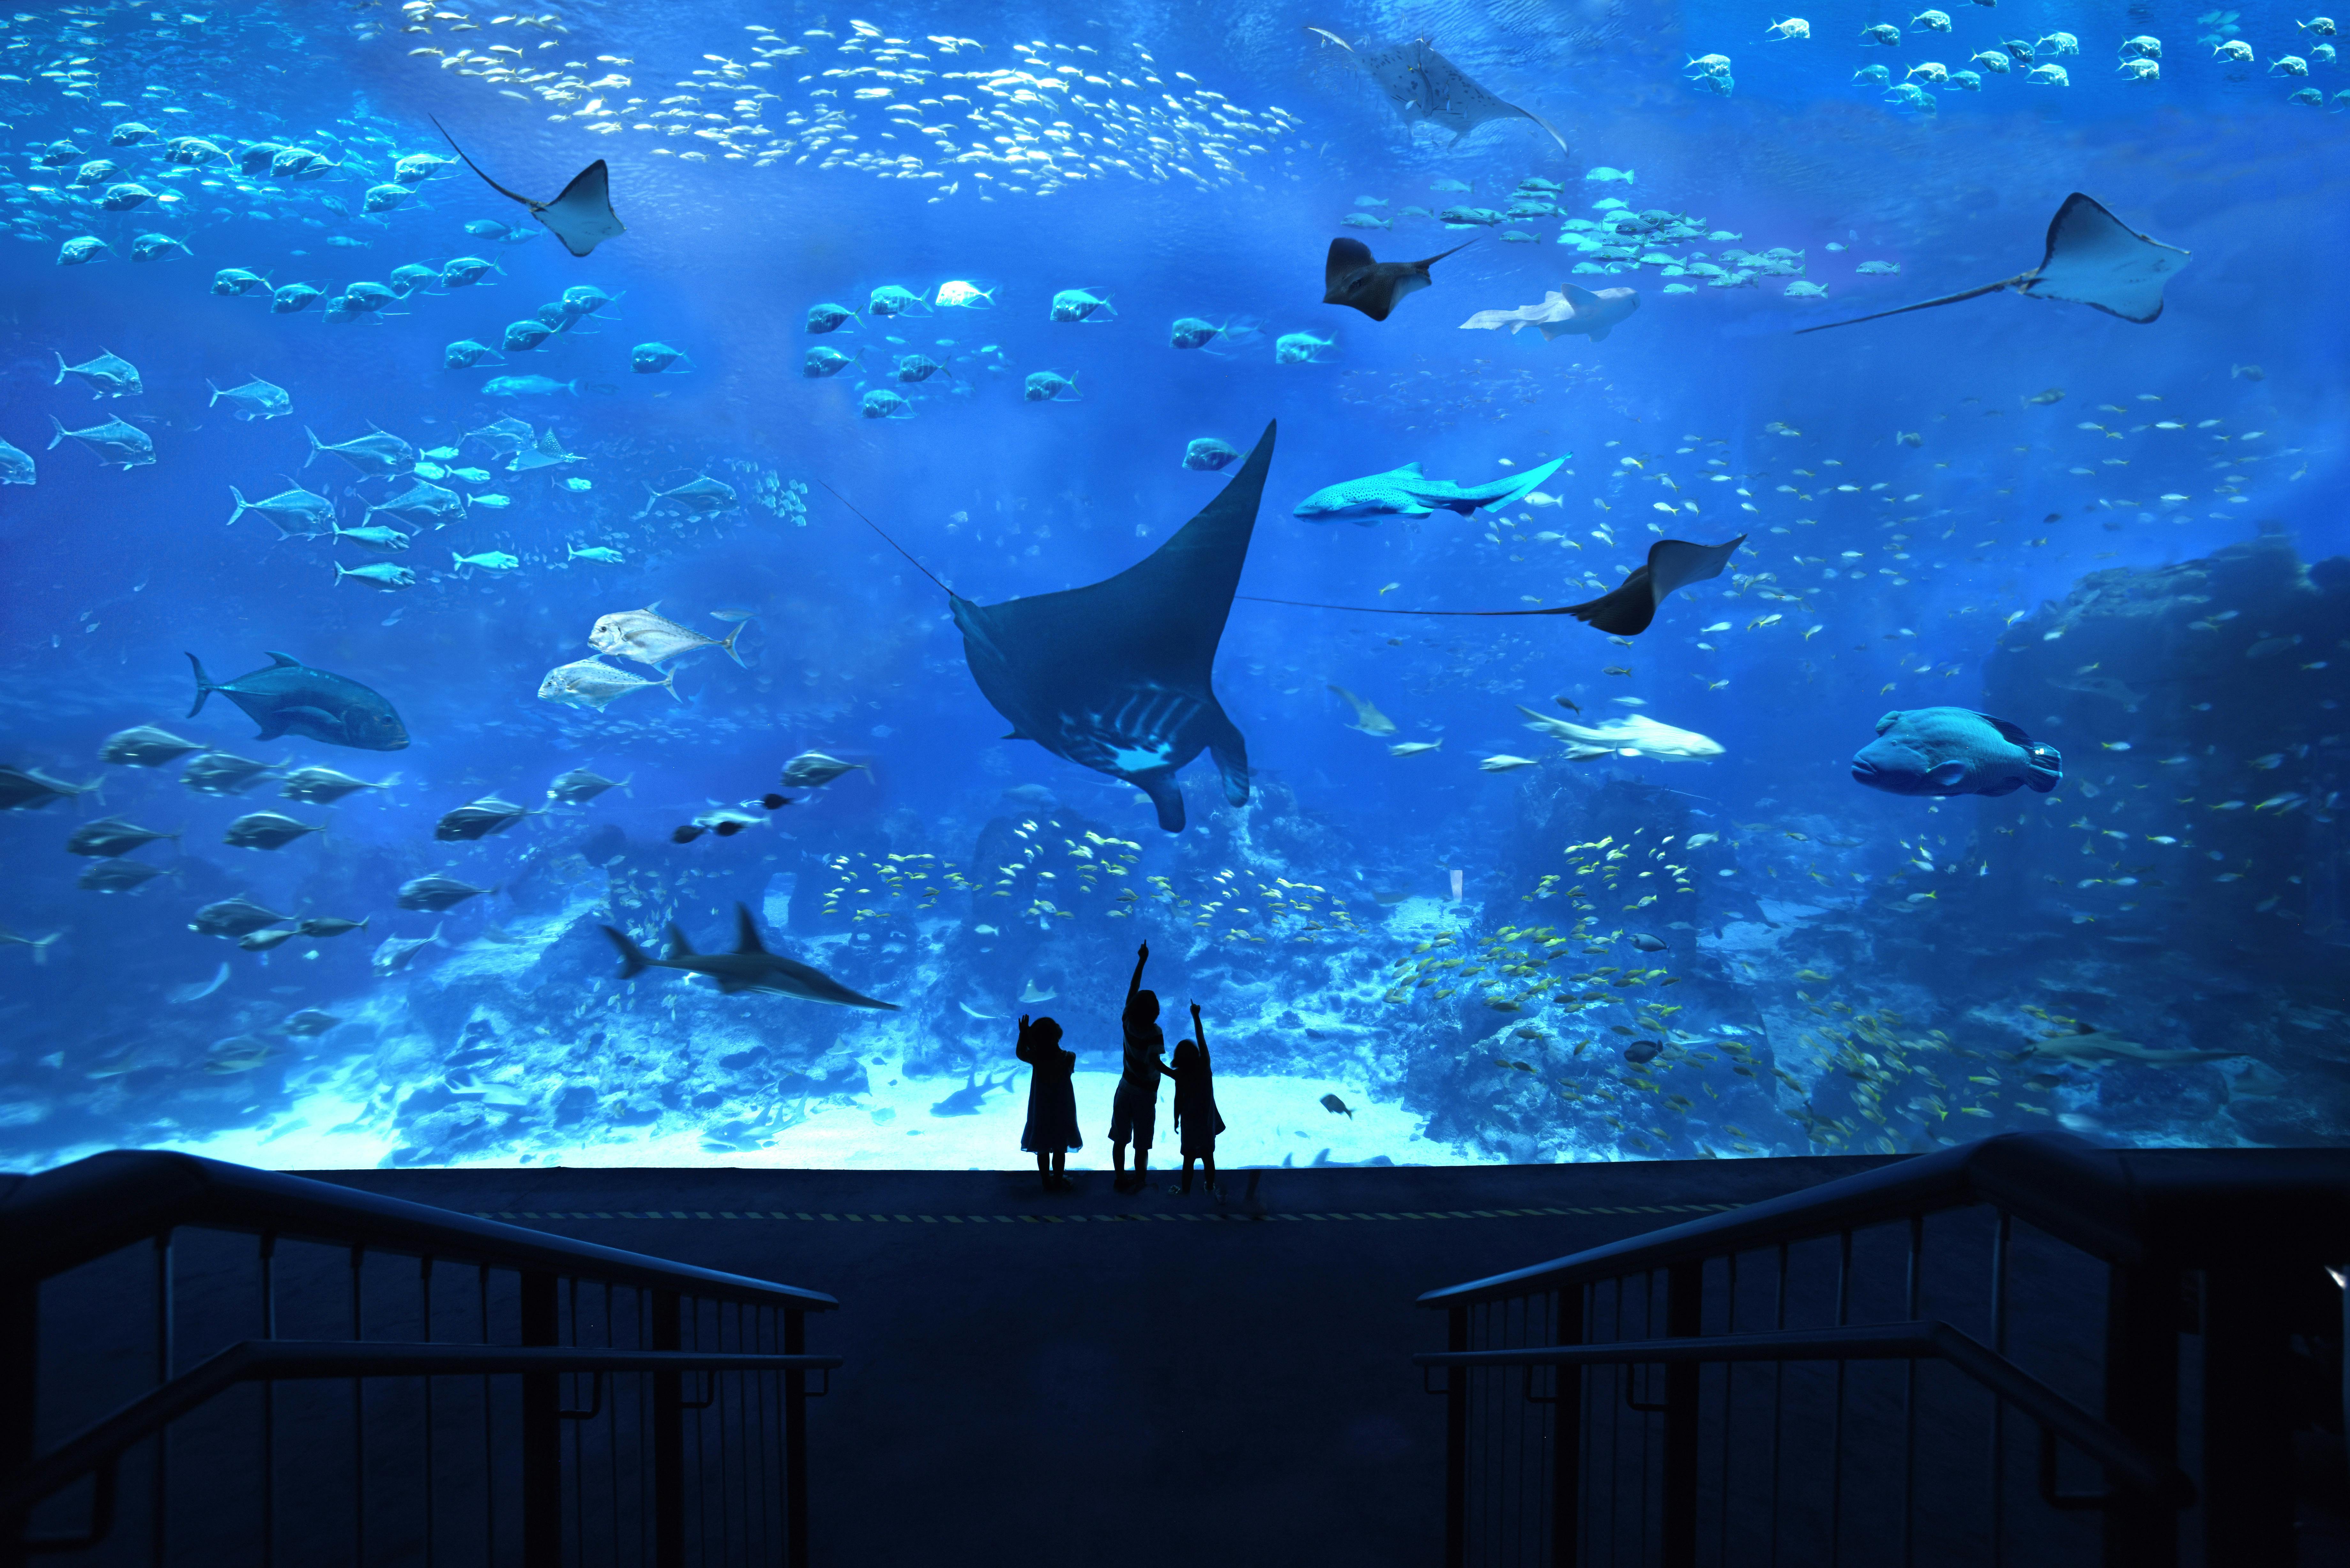 SEA Aquarium™ standaardtickets